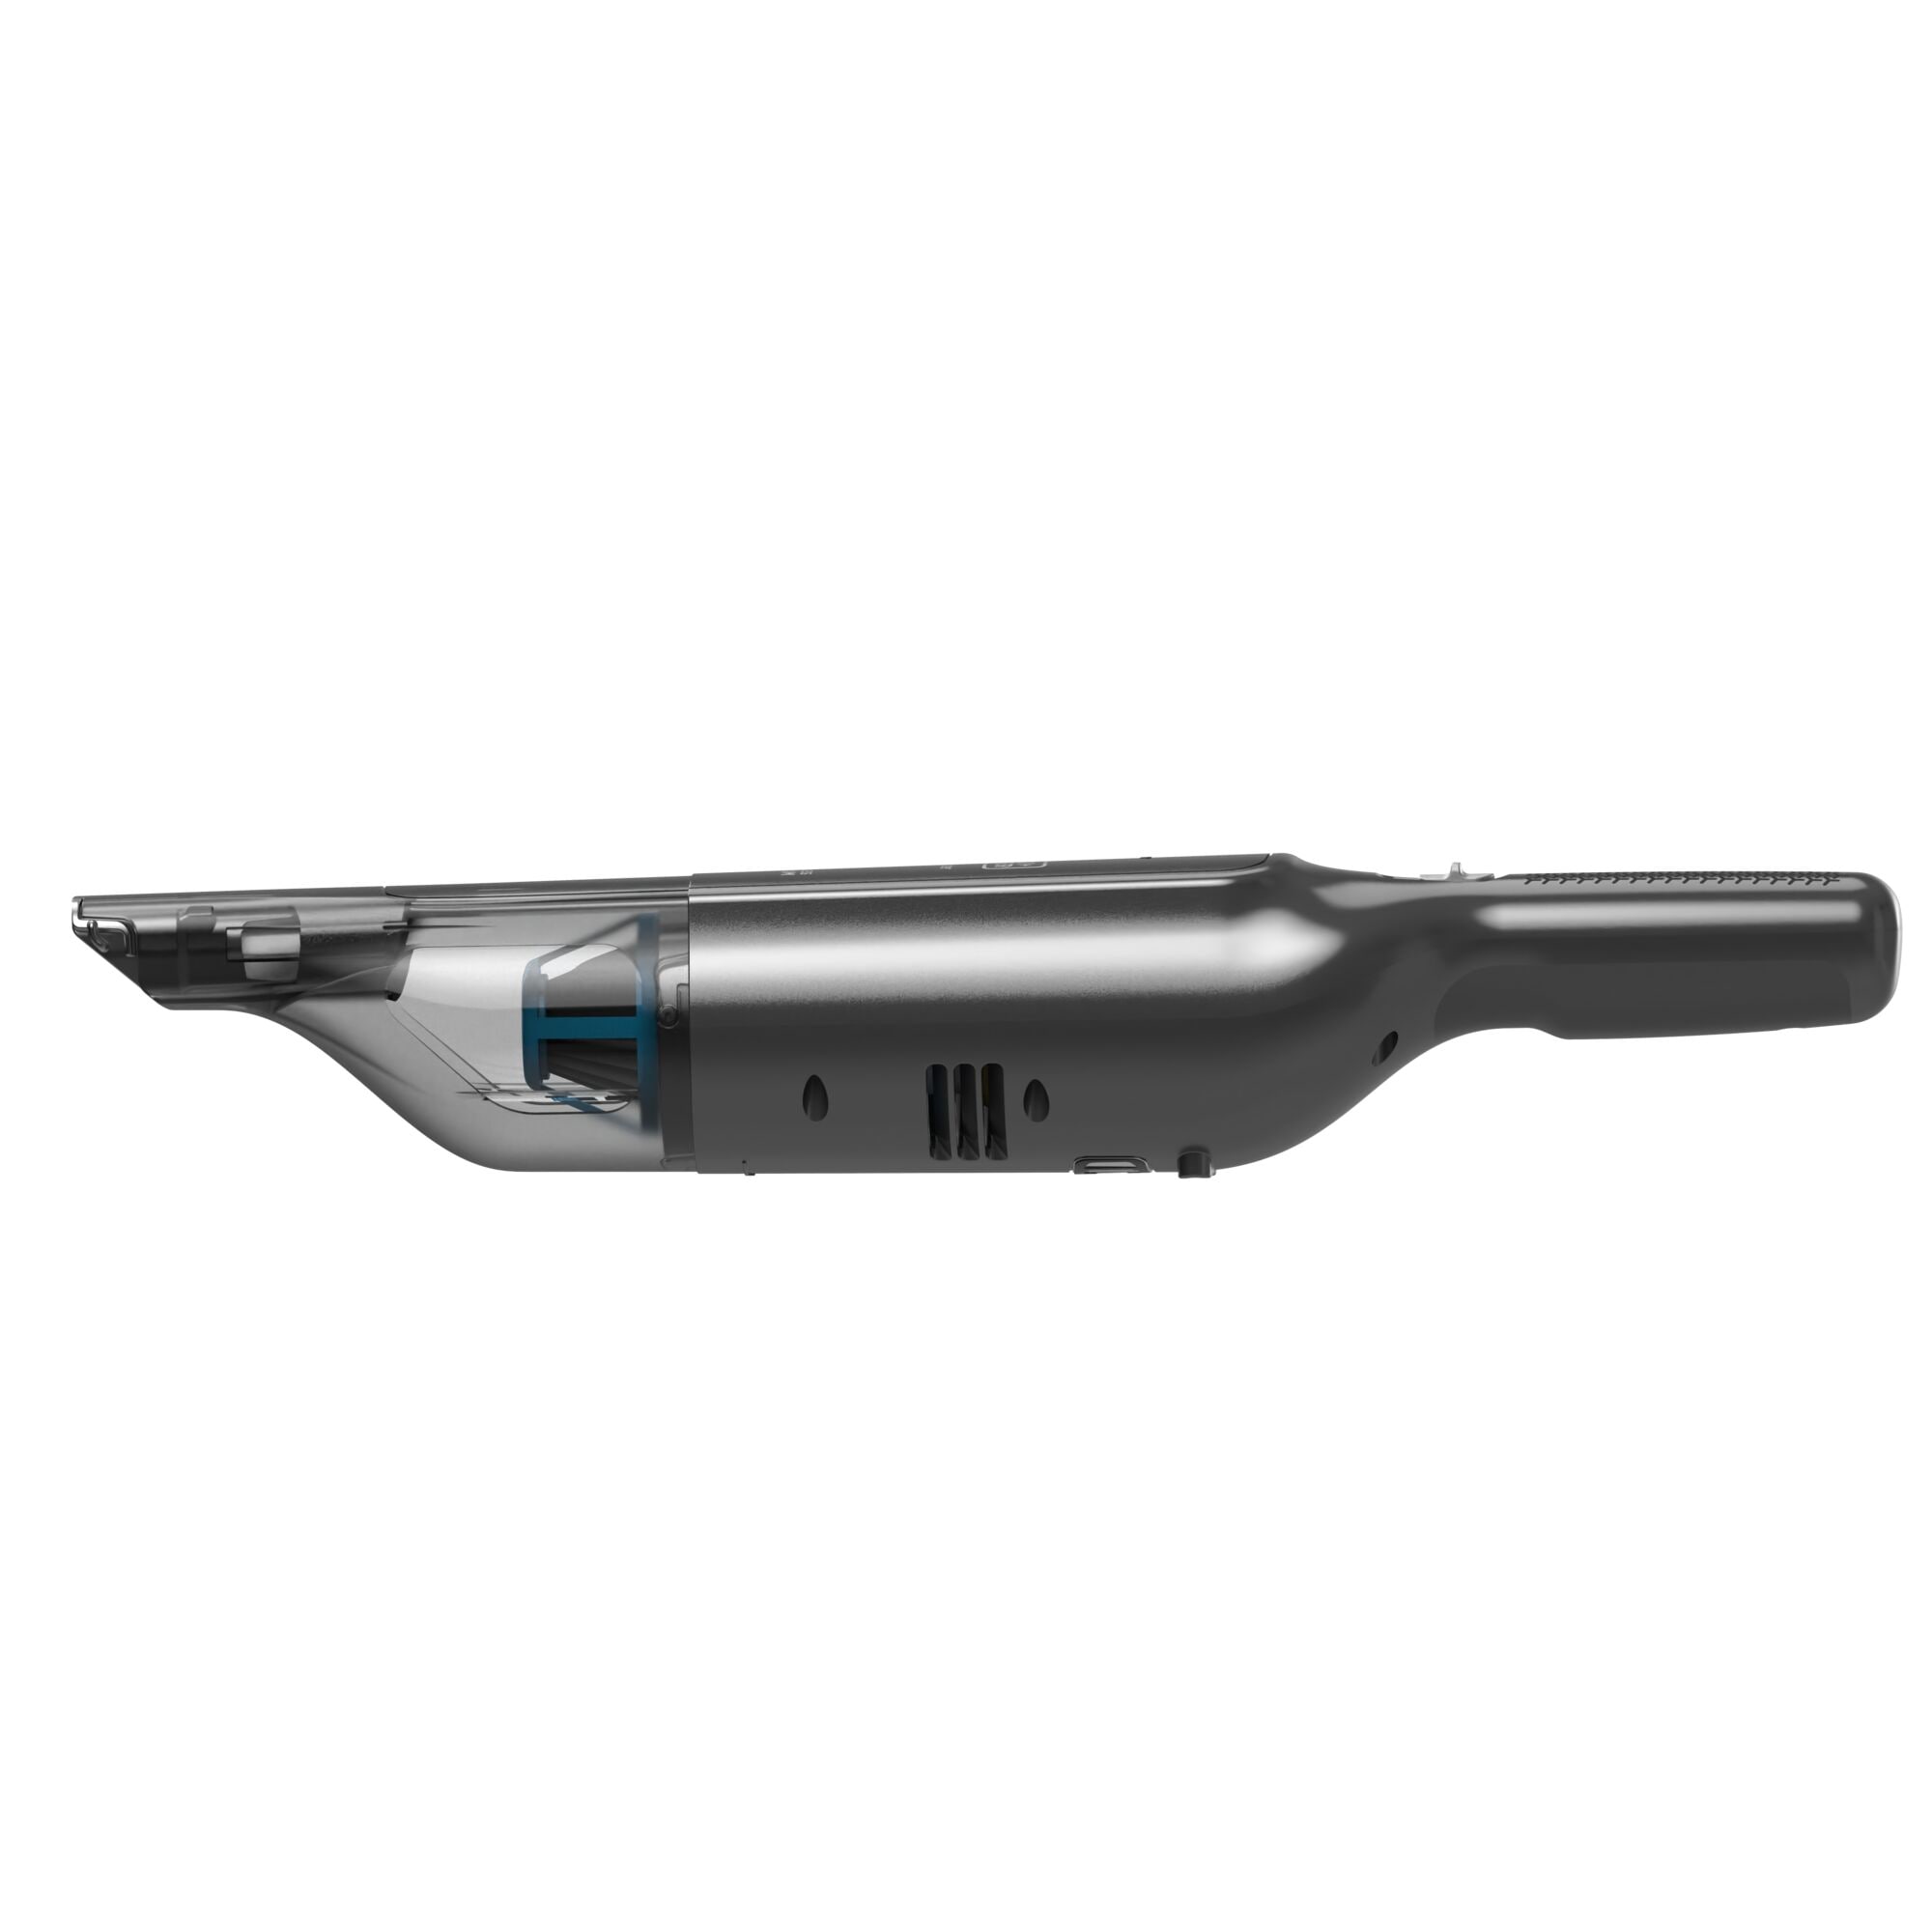 12V Max* Dustbuster Advancedclean+ Cordless Hand Vacuum